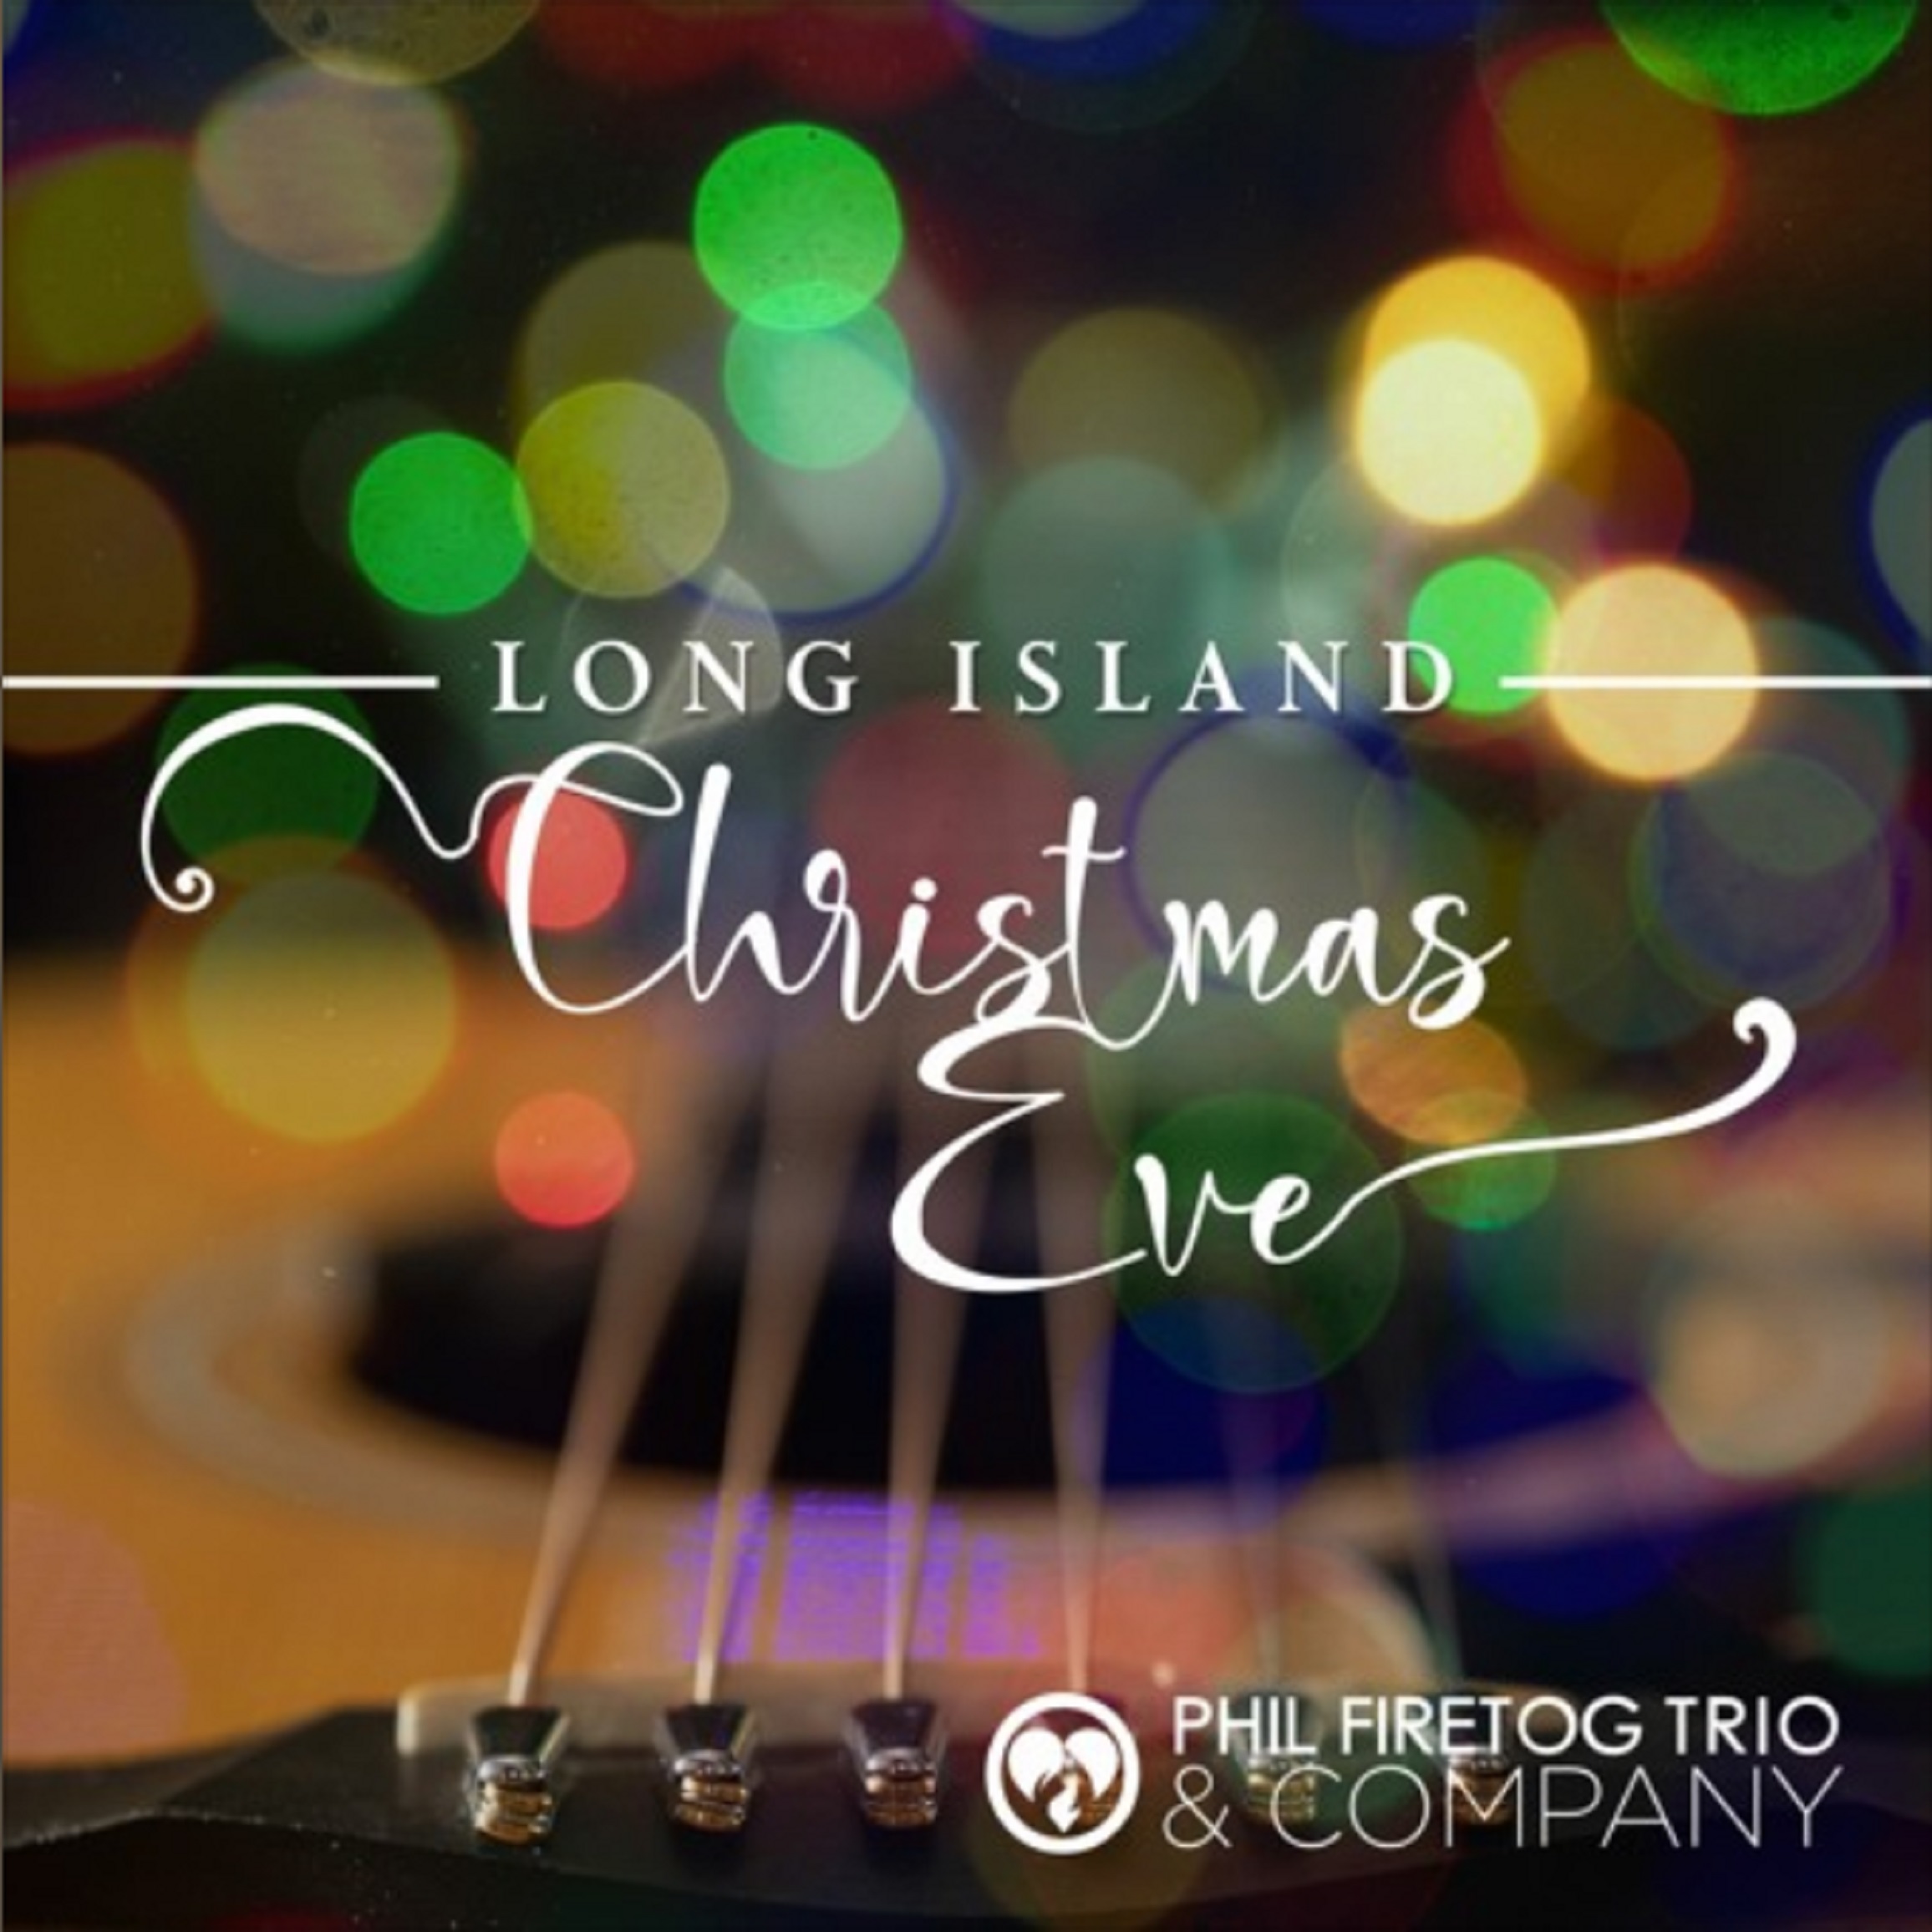 NY-Based Rock Band Phil Firetog Trio & Co. To Release Nostalgic Holiday Single "Long Island Christmas Eve"